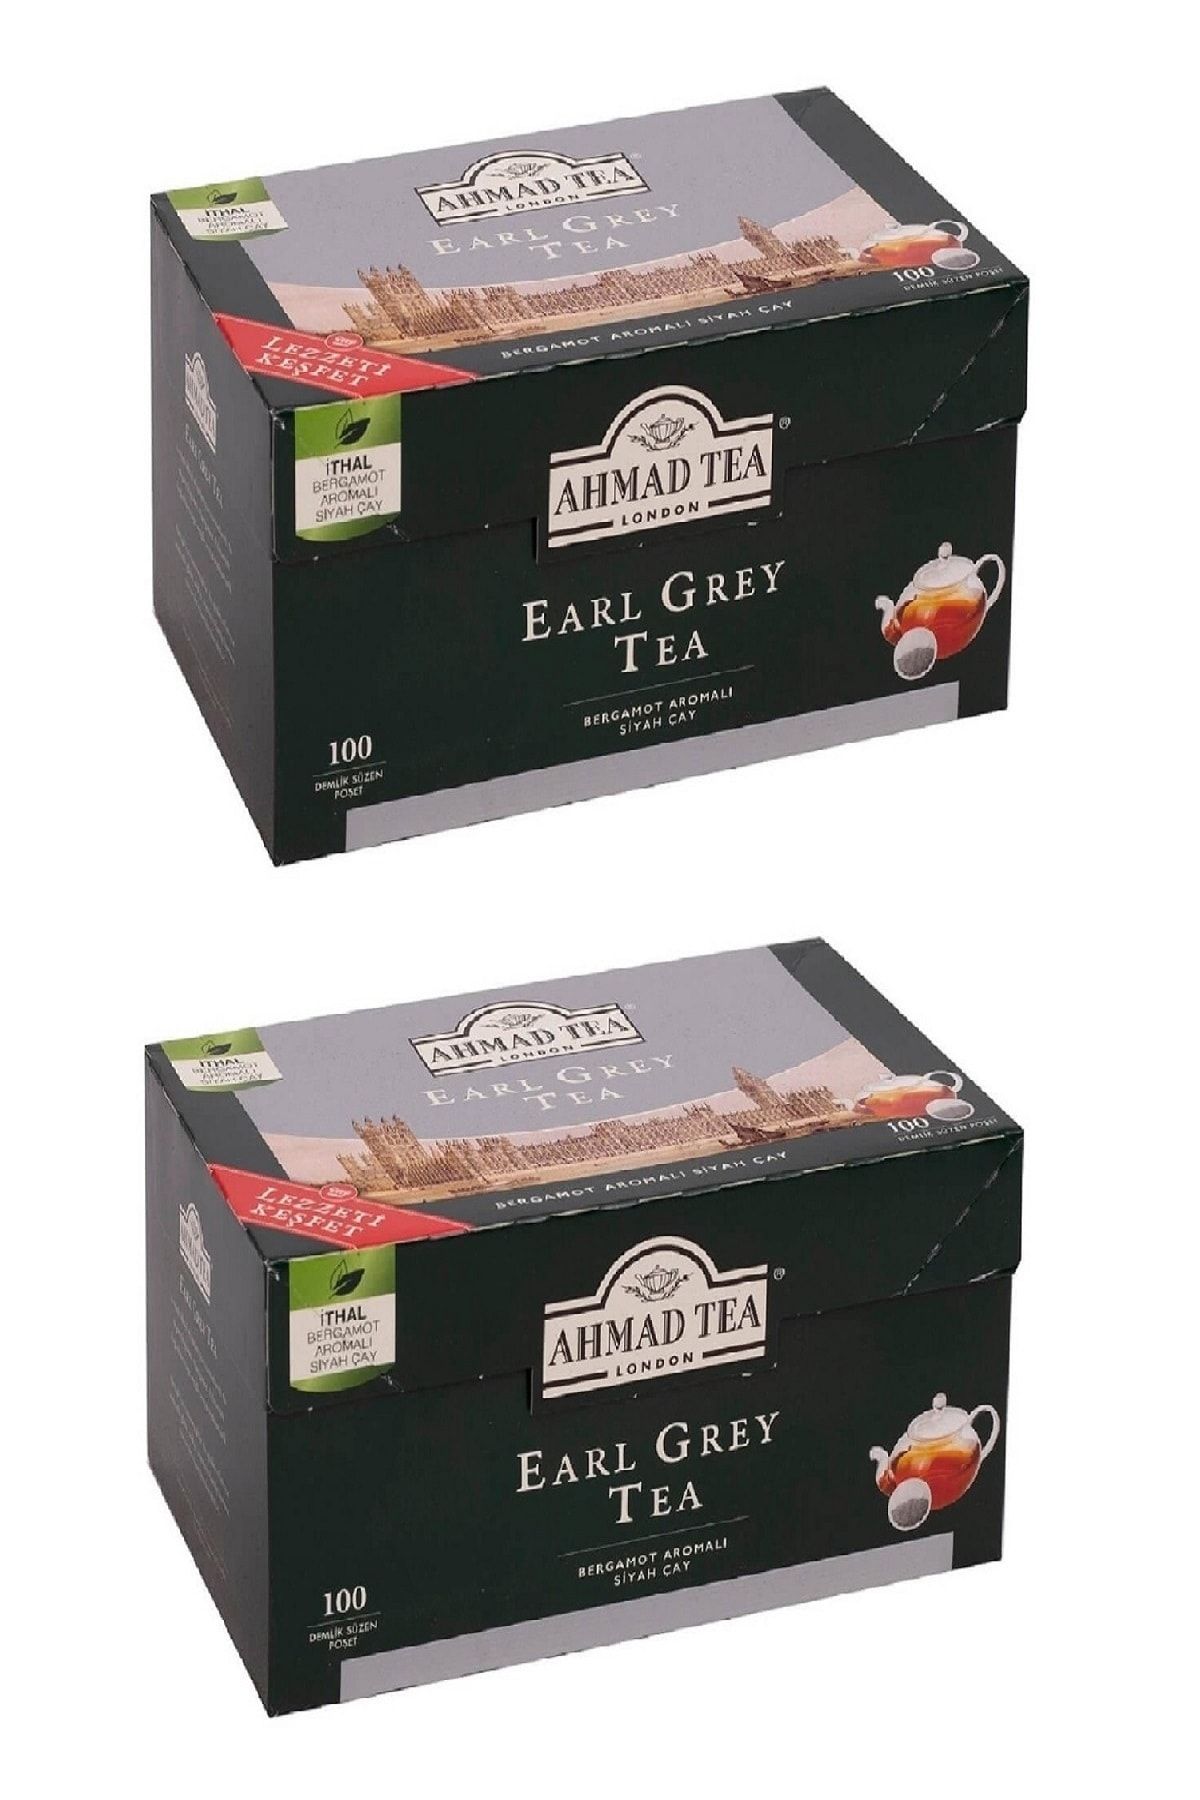 Ahmad Tea Earl Grey Demlik Poşet Çay 100'lü X 2 Adet